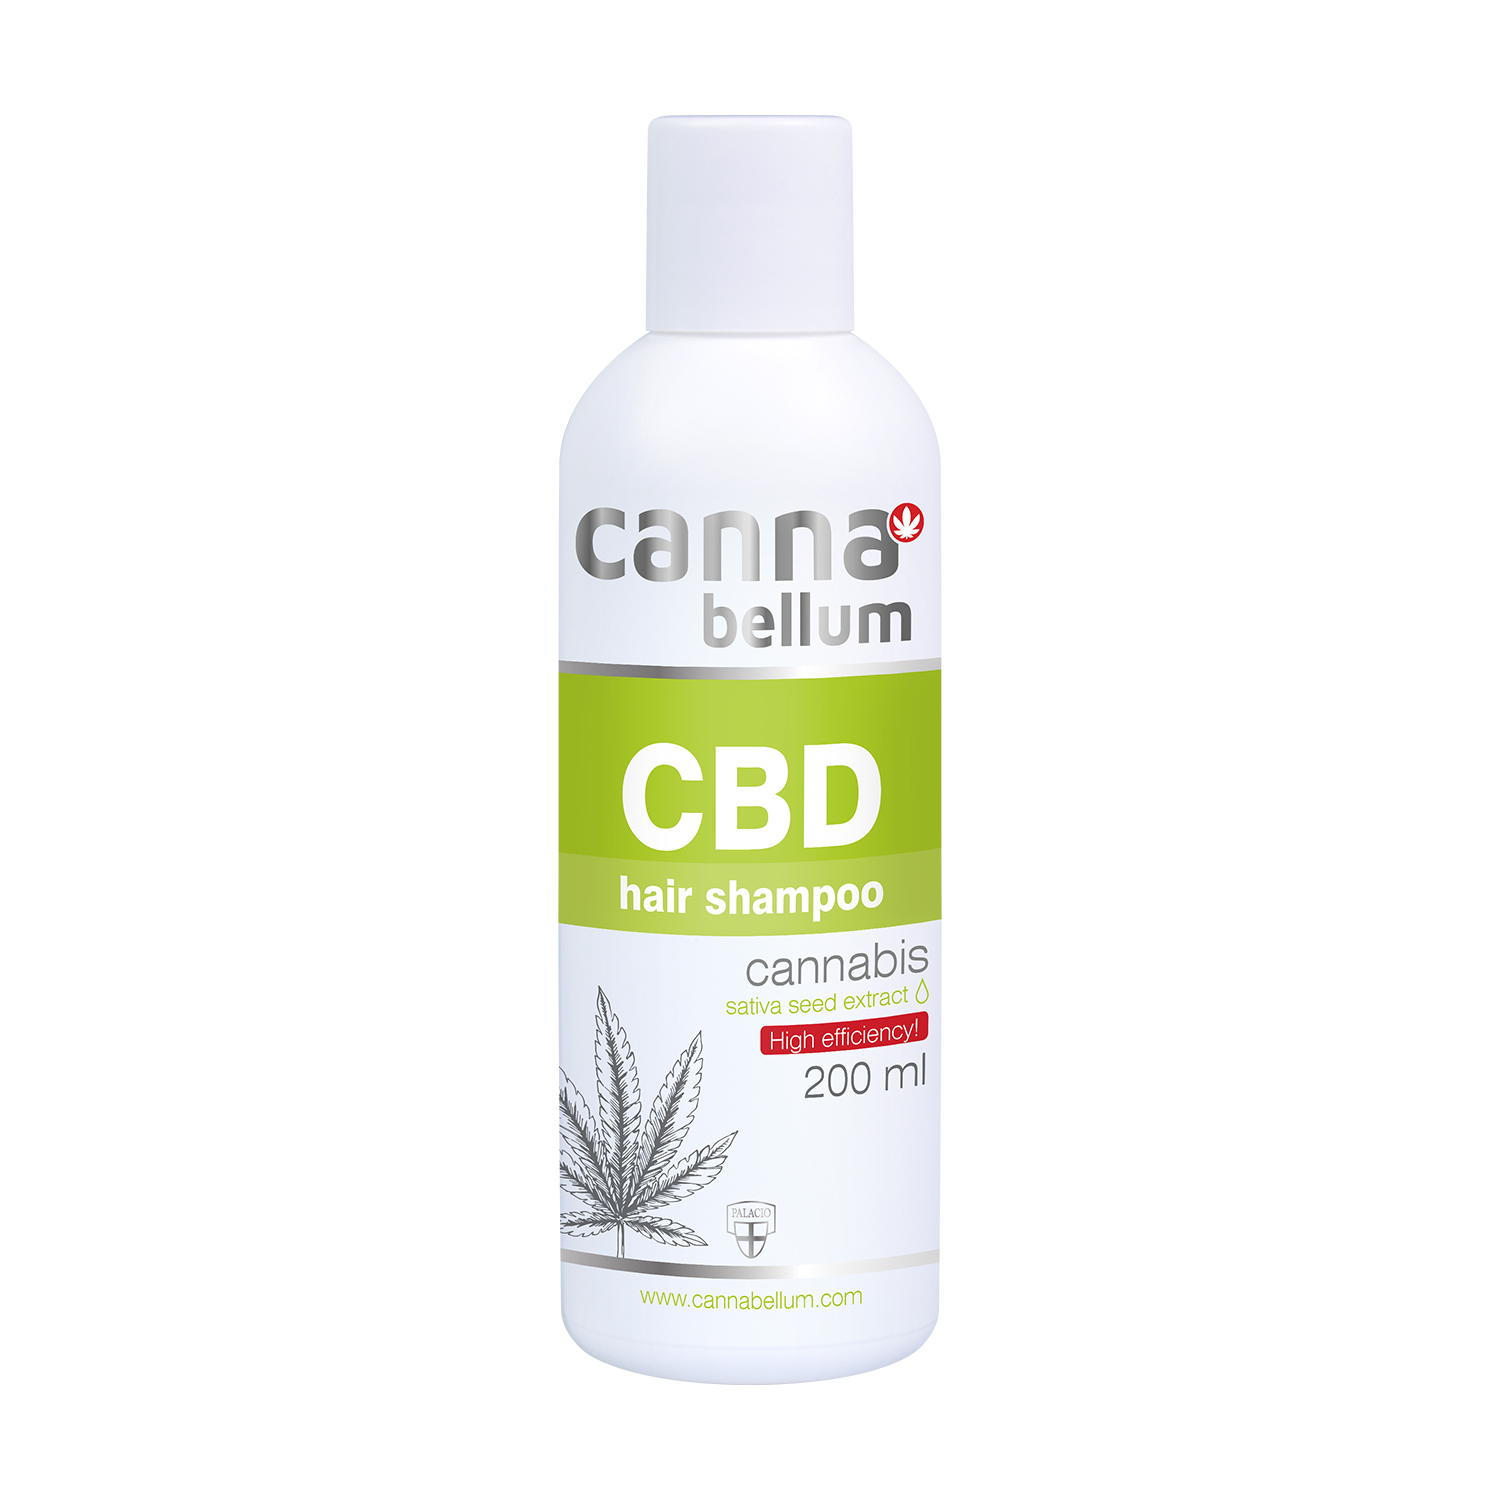 Cannabellum CBD hair shampoo 200ml P1251 WEB 45